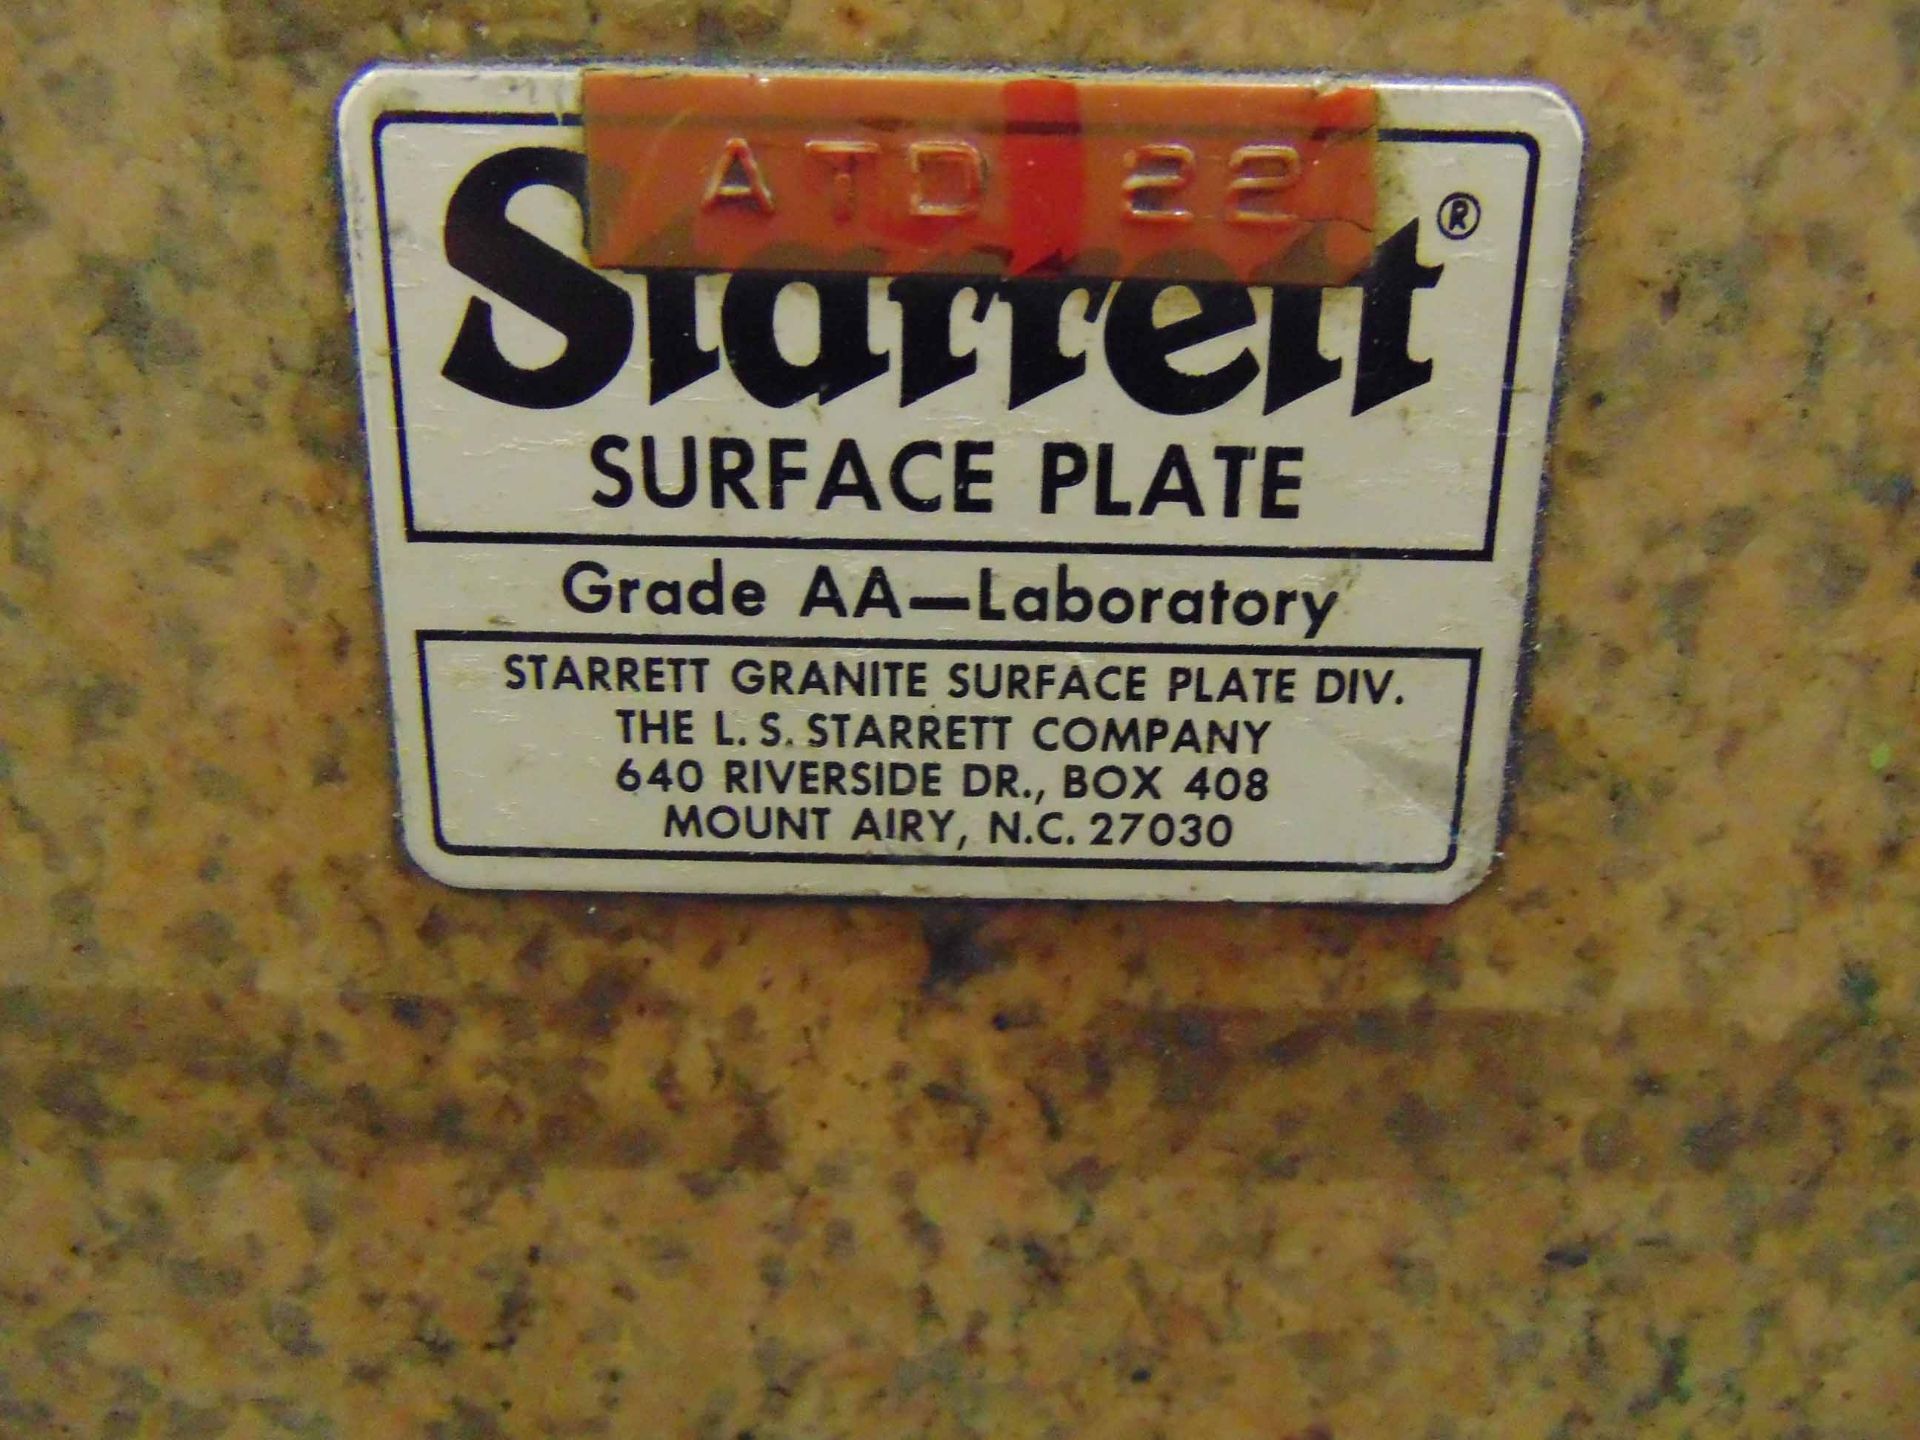 SURFACE PLATE, STARRETT, 49" x 90" x 12" thk., Grade AA laboratory, pink granite, on fabricated - Image 2 of 2